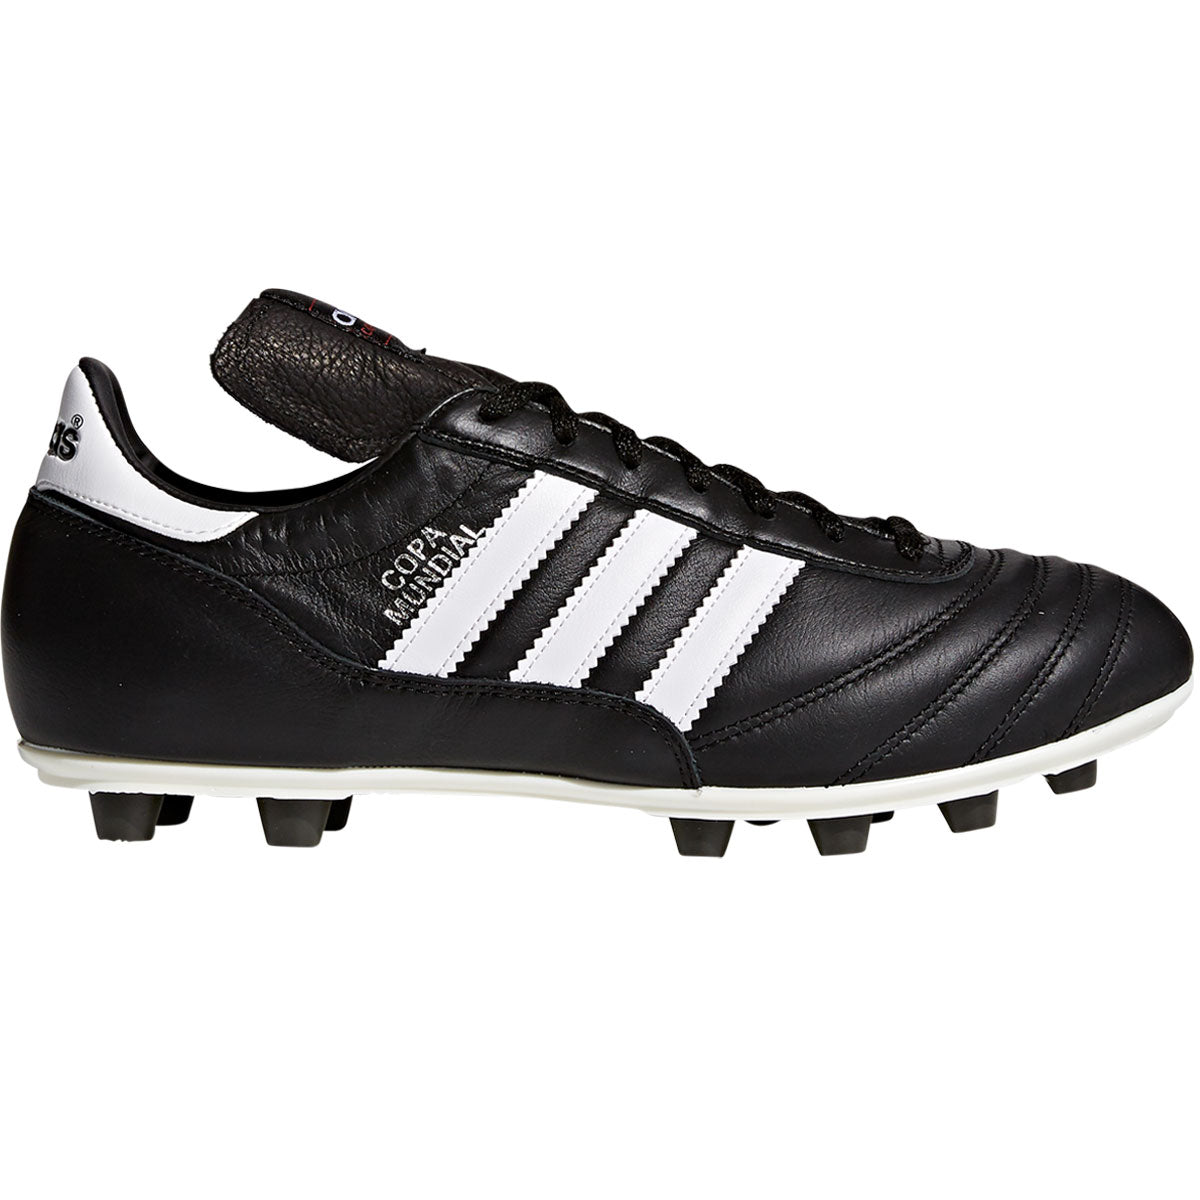 adidas Copa Mundial FG Football Boots - Adult - Black/White